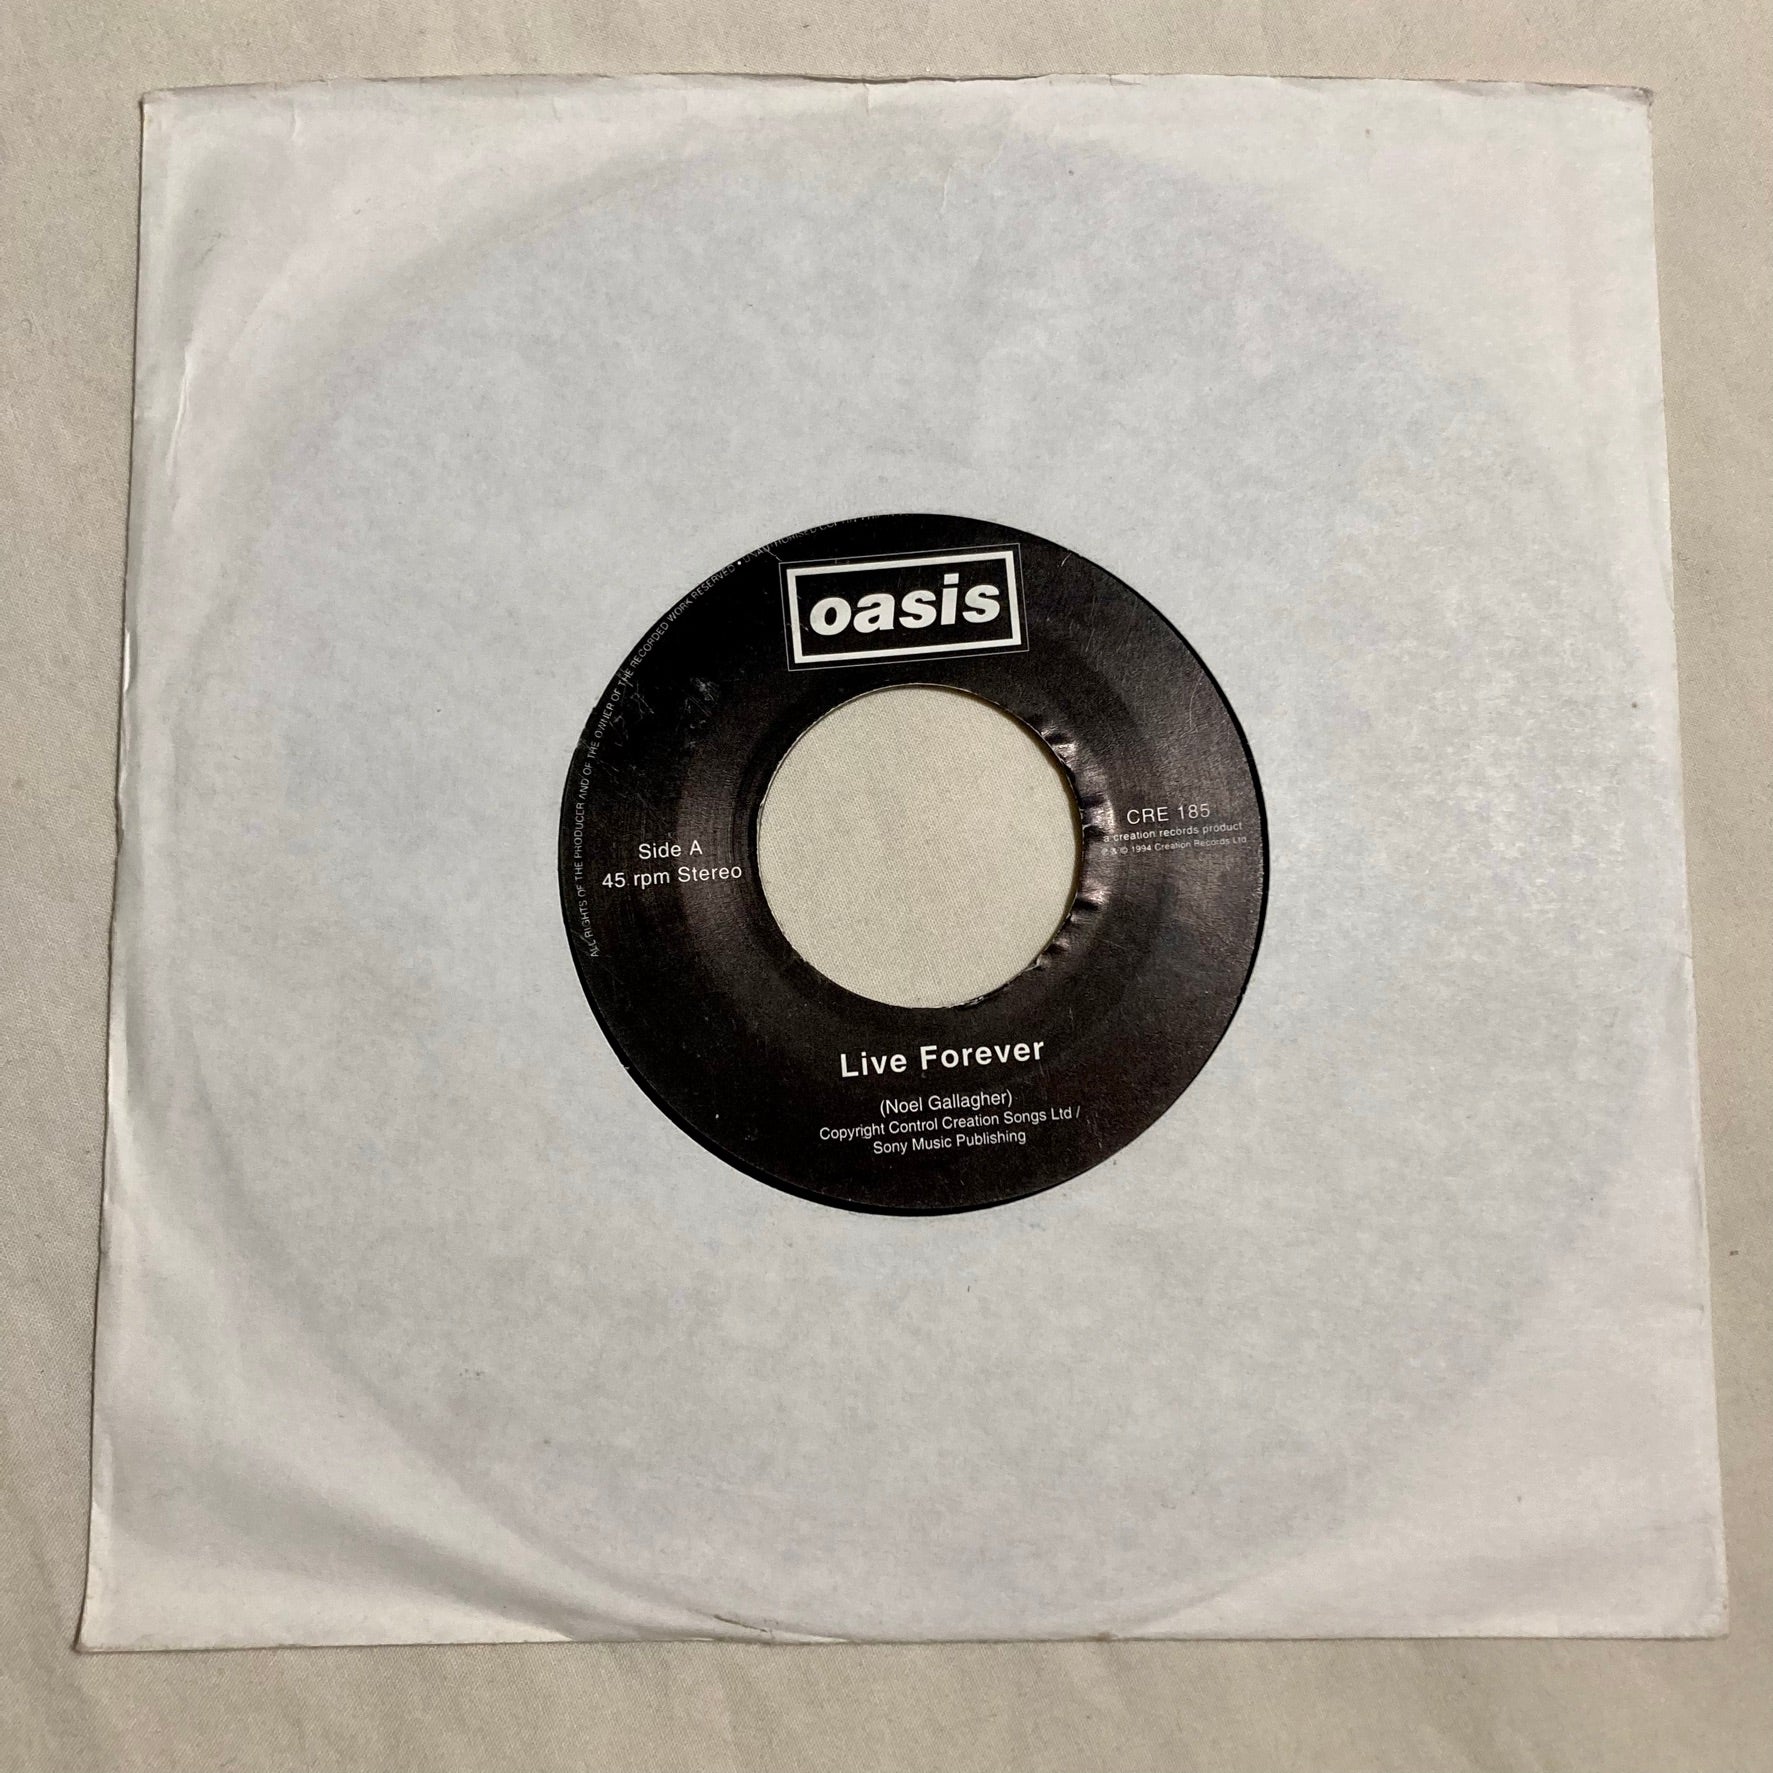 Oasis - Live Forever 7" single (rare Jukebox copy!)